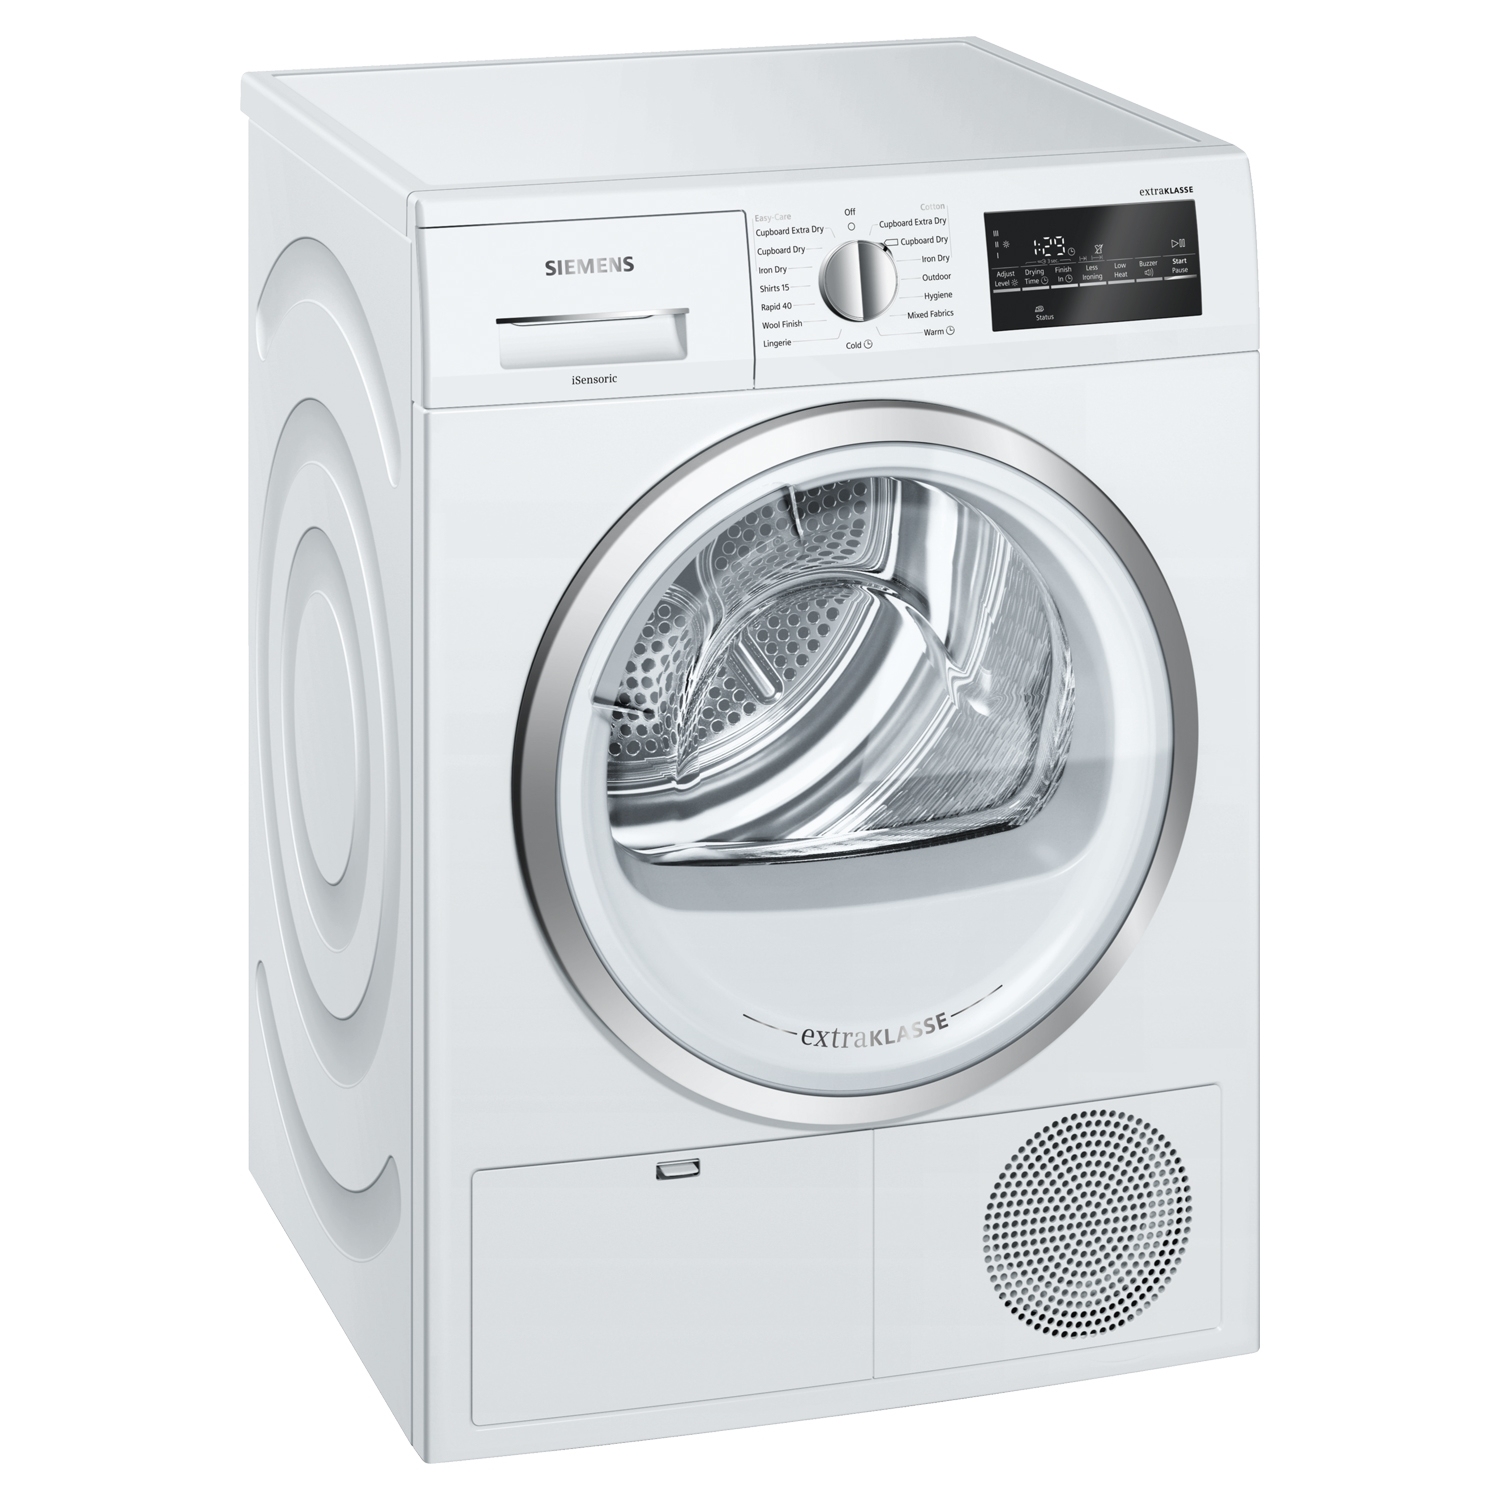 Siemens extraKlasse WT46G491GB iQ500 9kg Condenser Tumble Dryer - White - 1